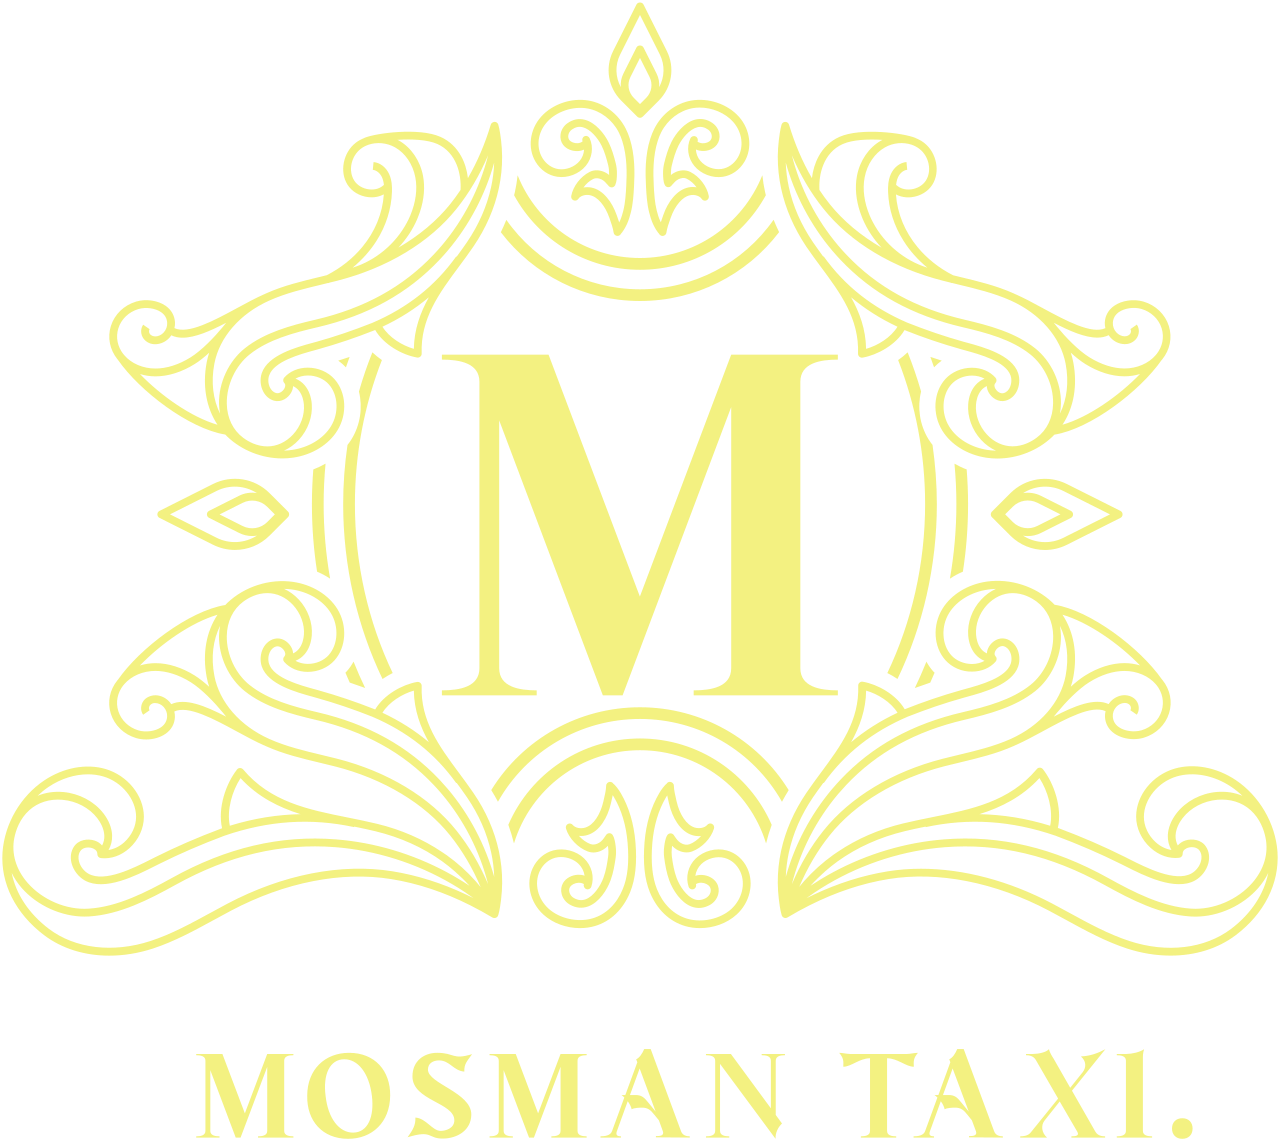 MoSman taxi.'s logo